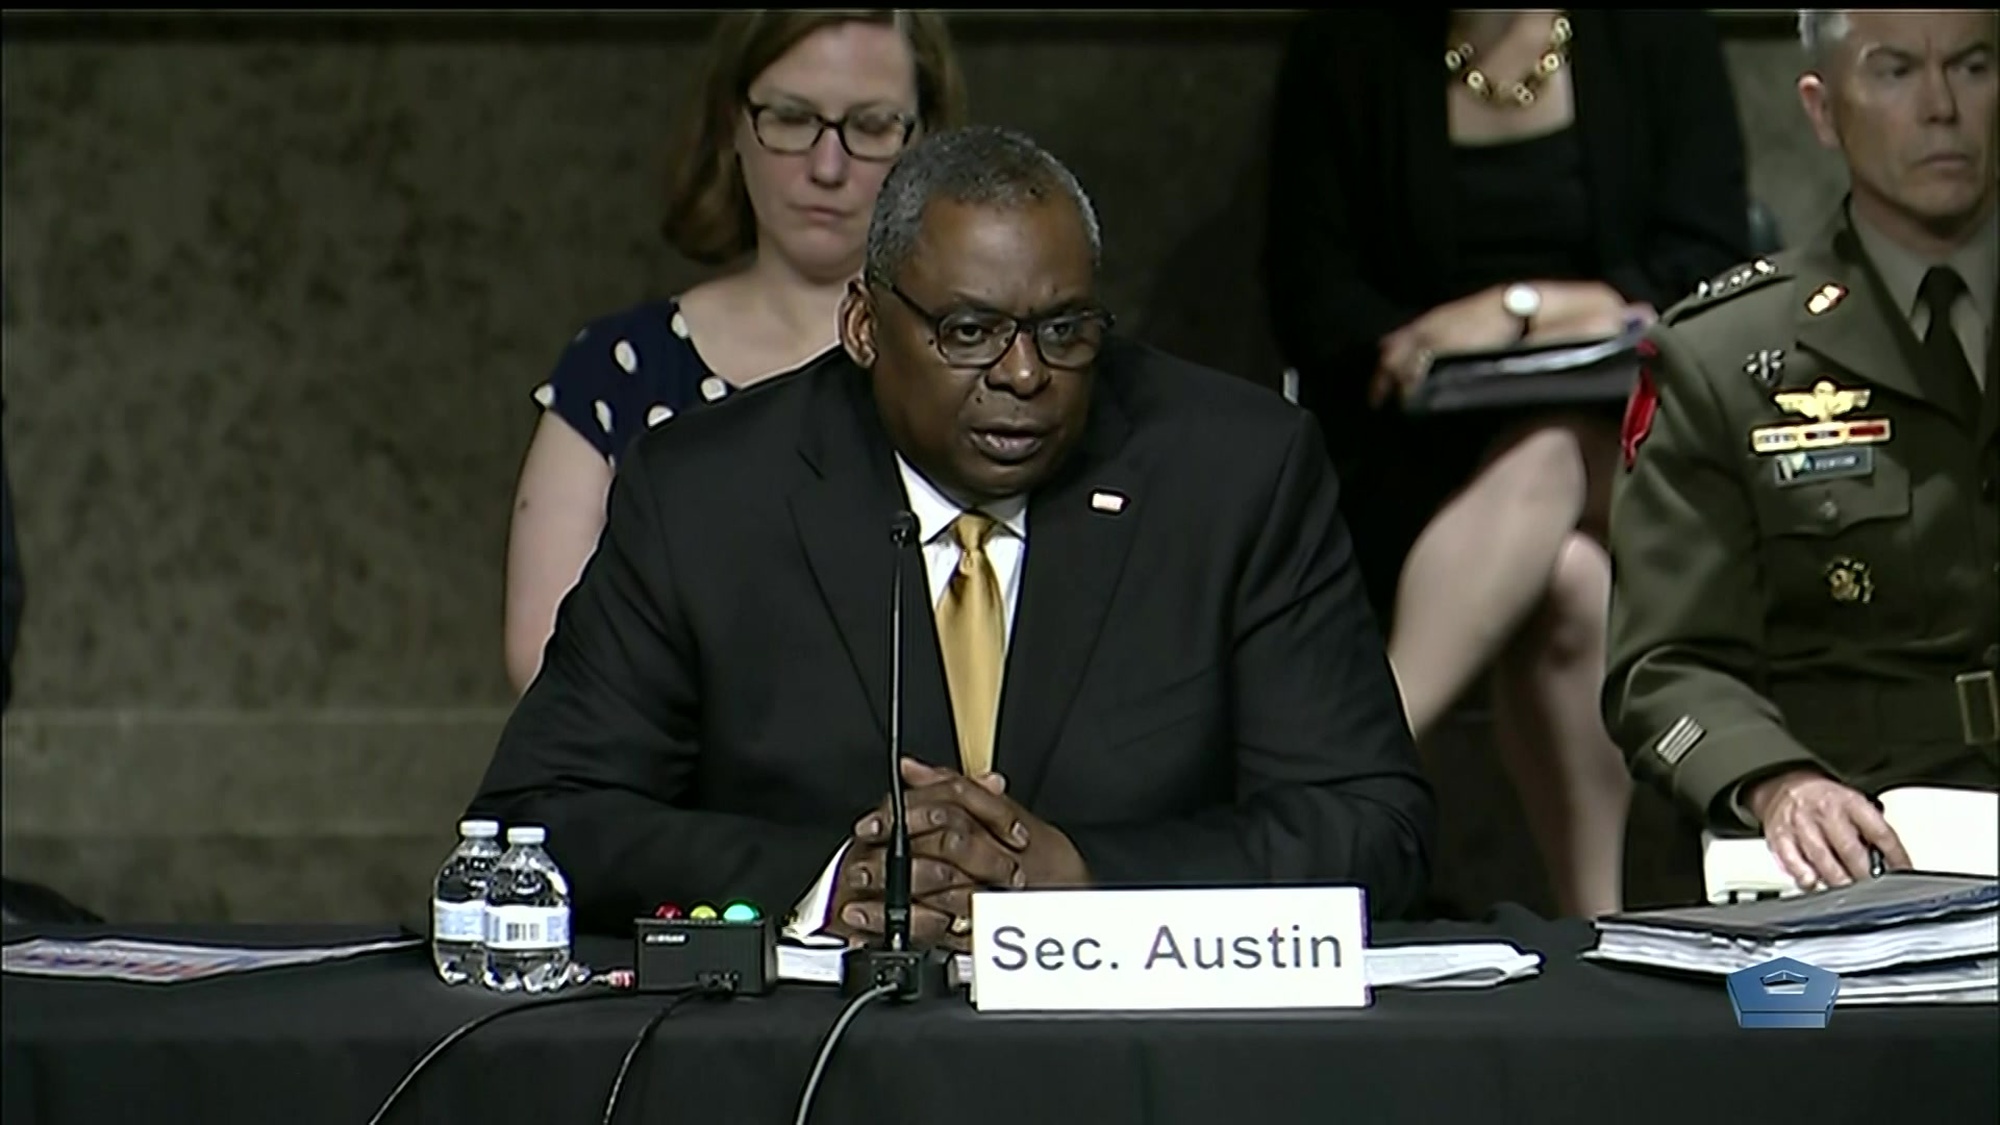 Secretary of Defense Lloyd J. Austin III sits and speaks at a table.